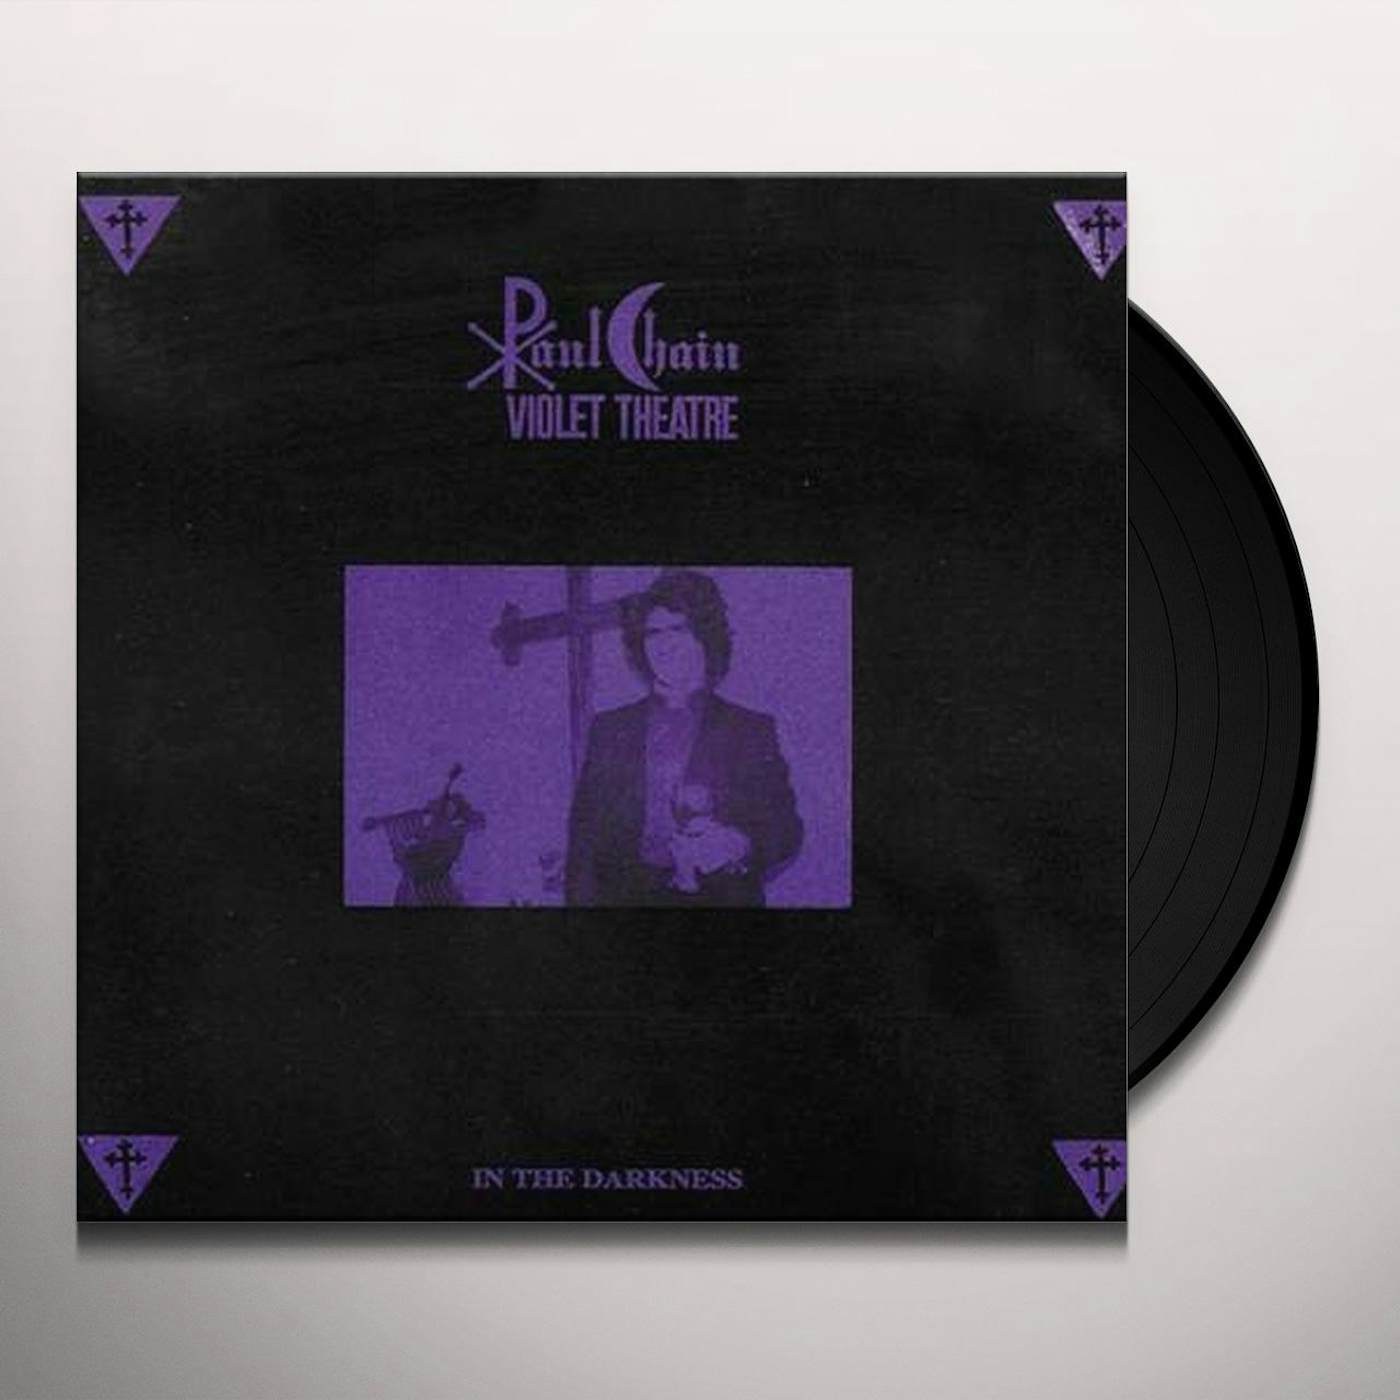 Paul Chain Violet Theatre IN THE DARKNESS/VIOLET VINYL Vinyl Record